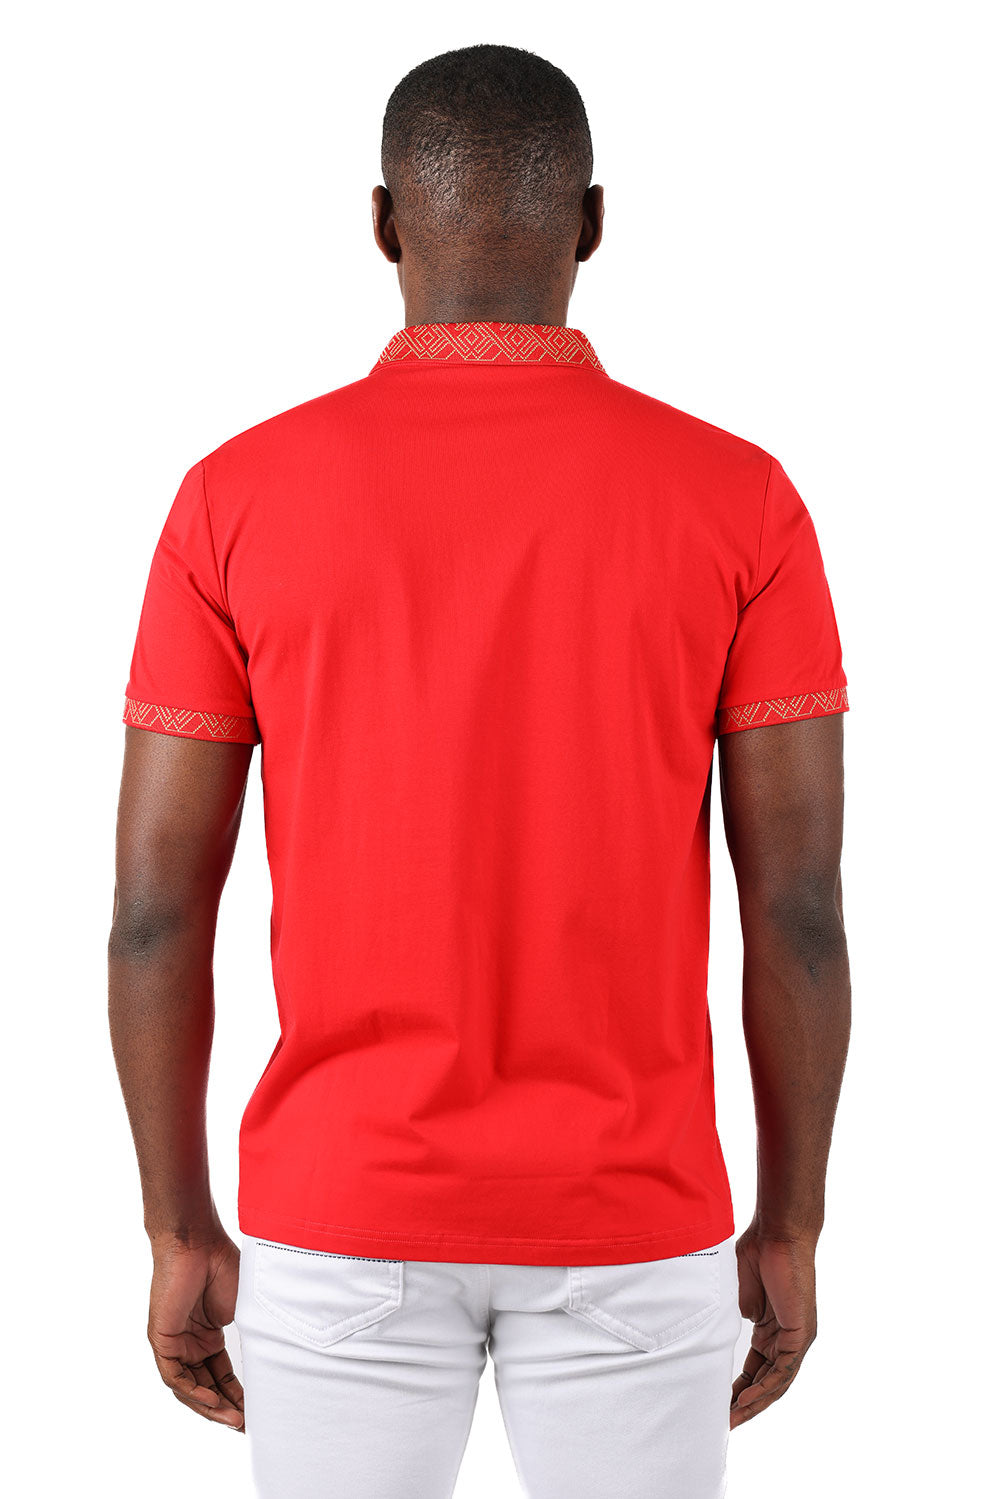 Barabas Men's Collar Pattern Short Sleeve Solid Color Shirts 3P01 Red